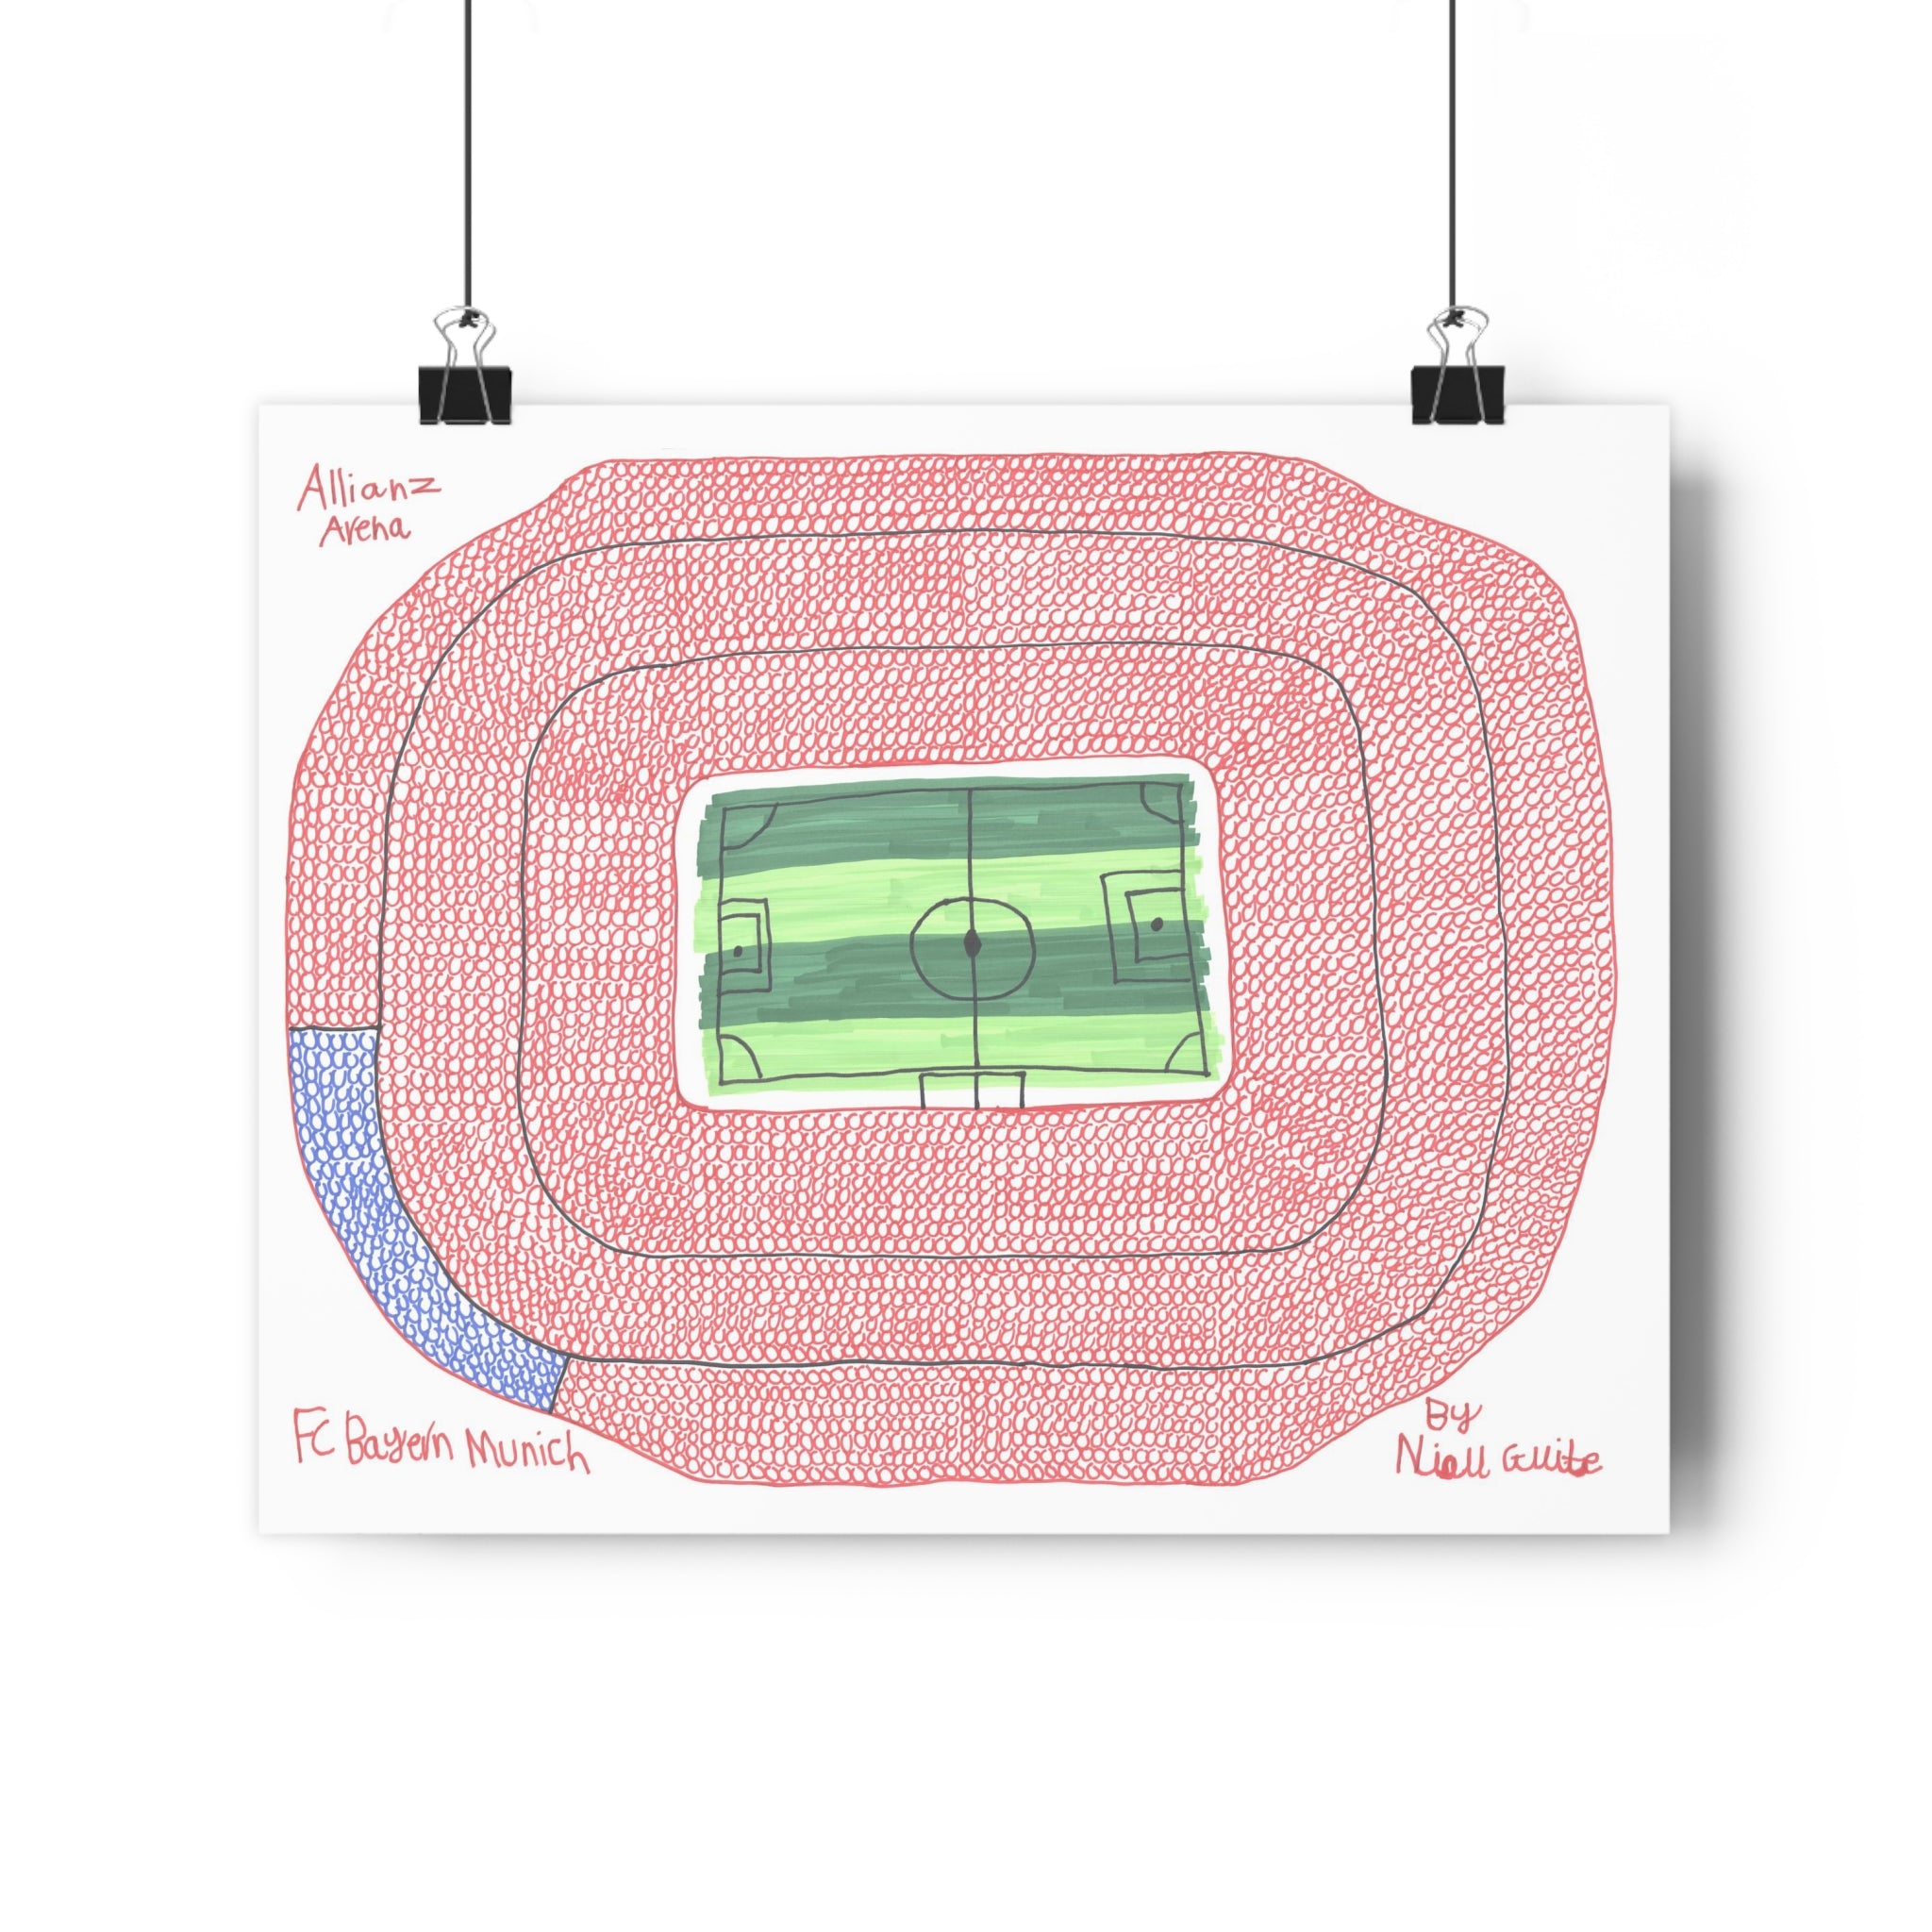 FC Bayern Munich - Allianz Arena - Print